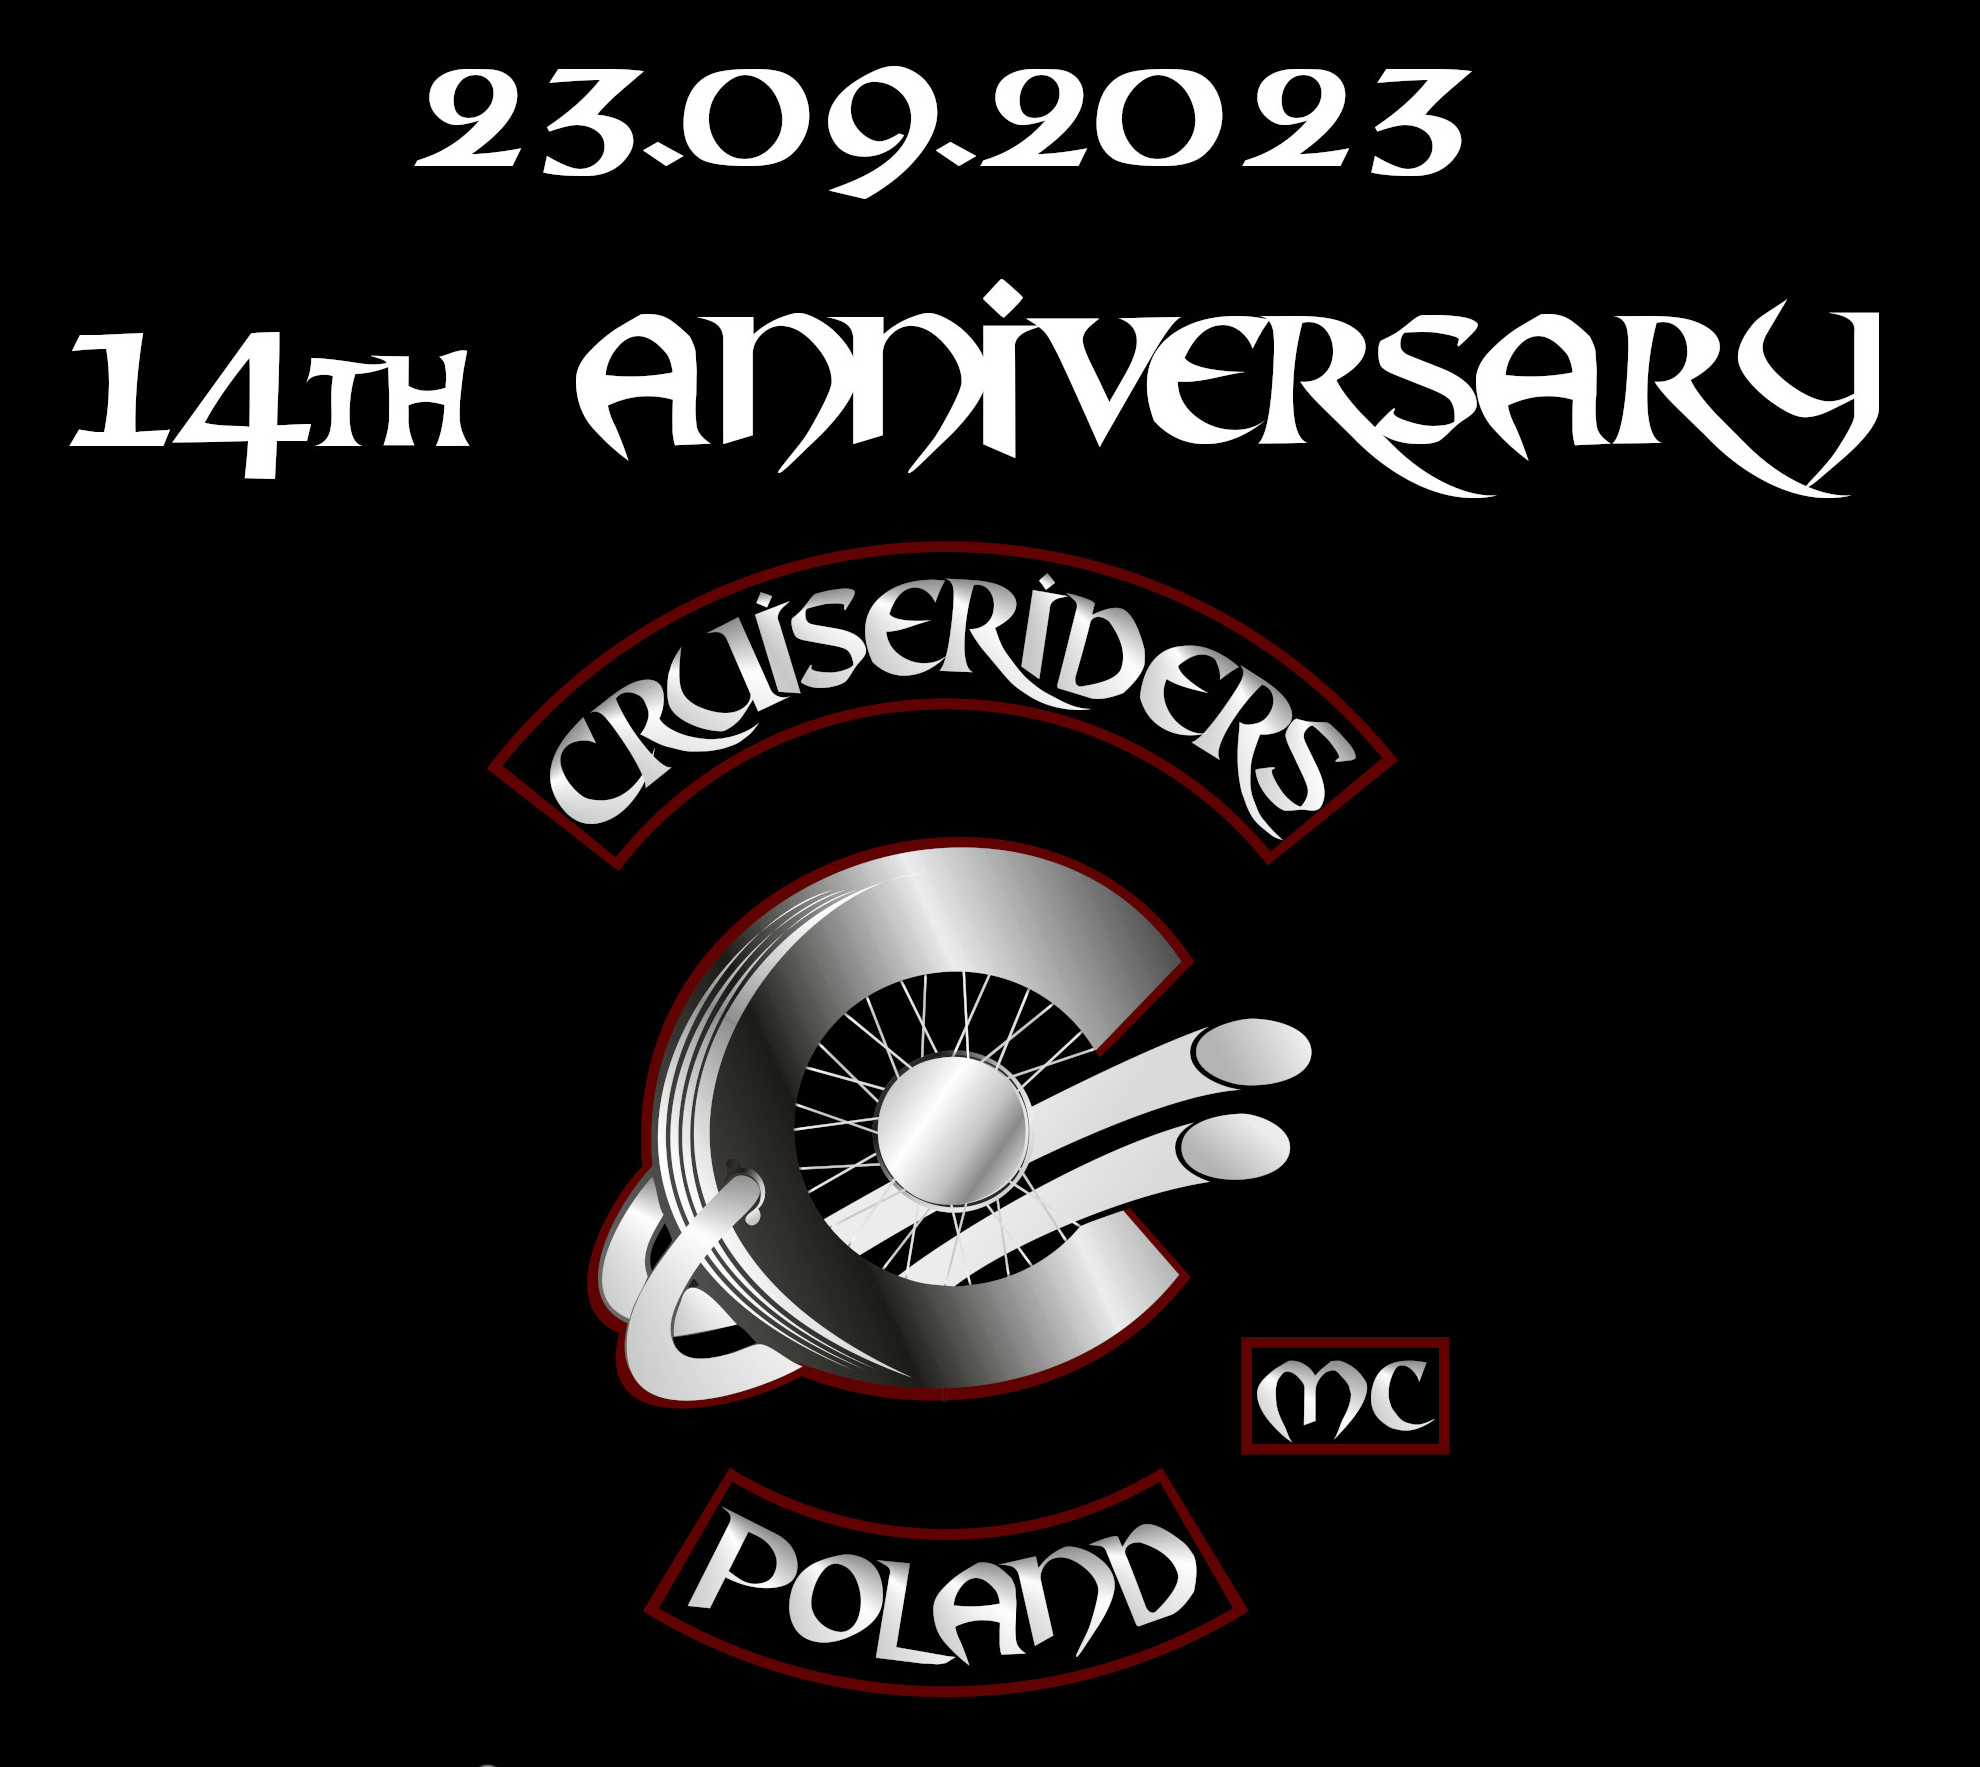 14_anniversary_crds_mc_banner.jpg